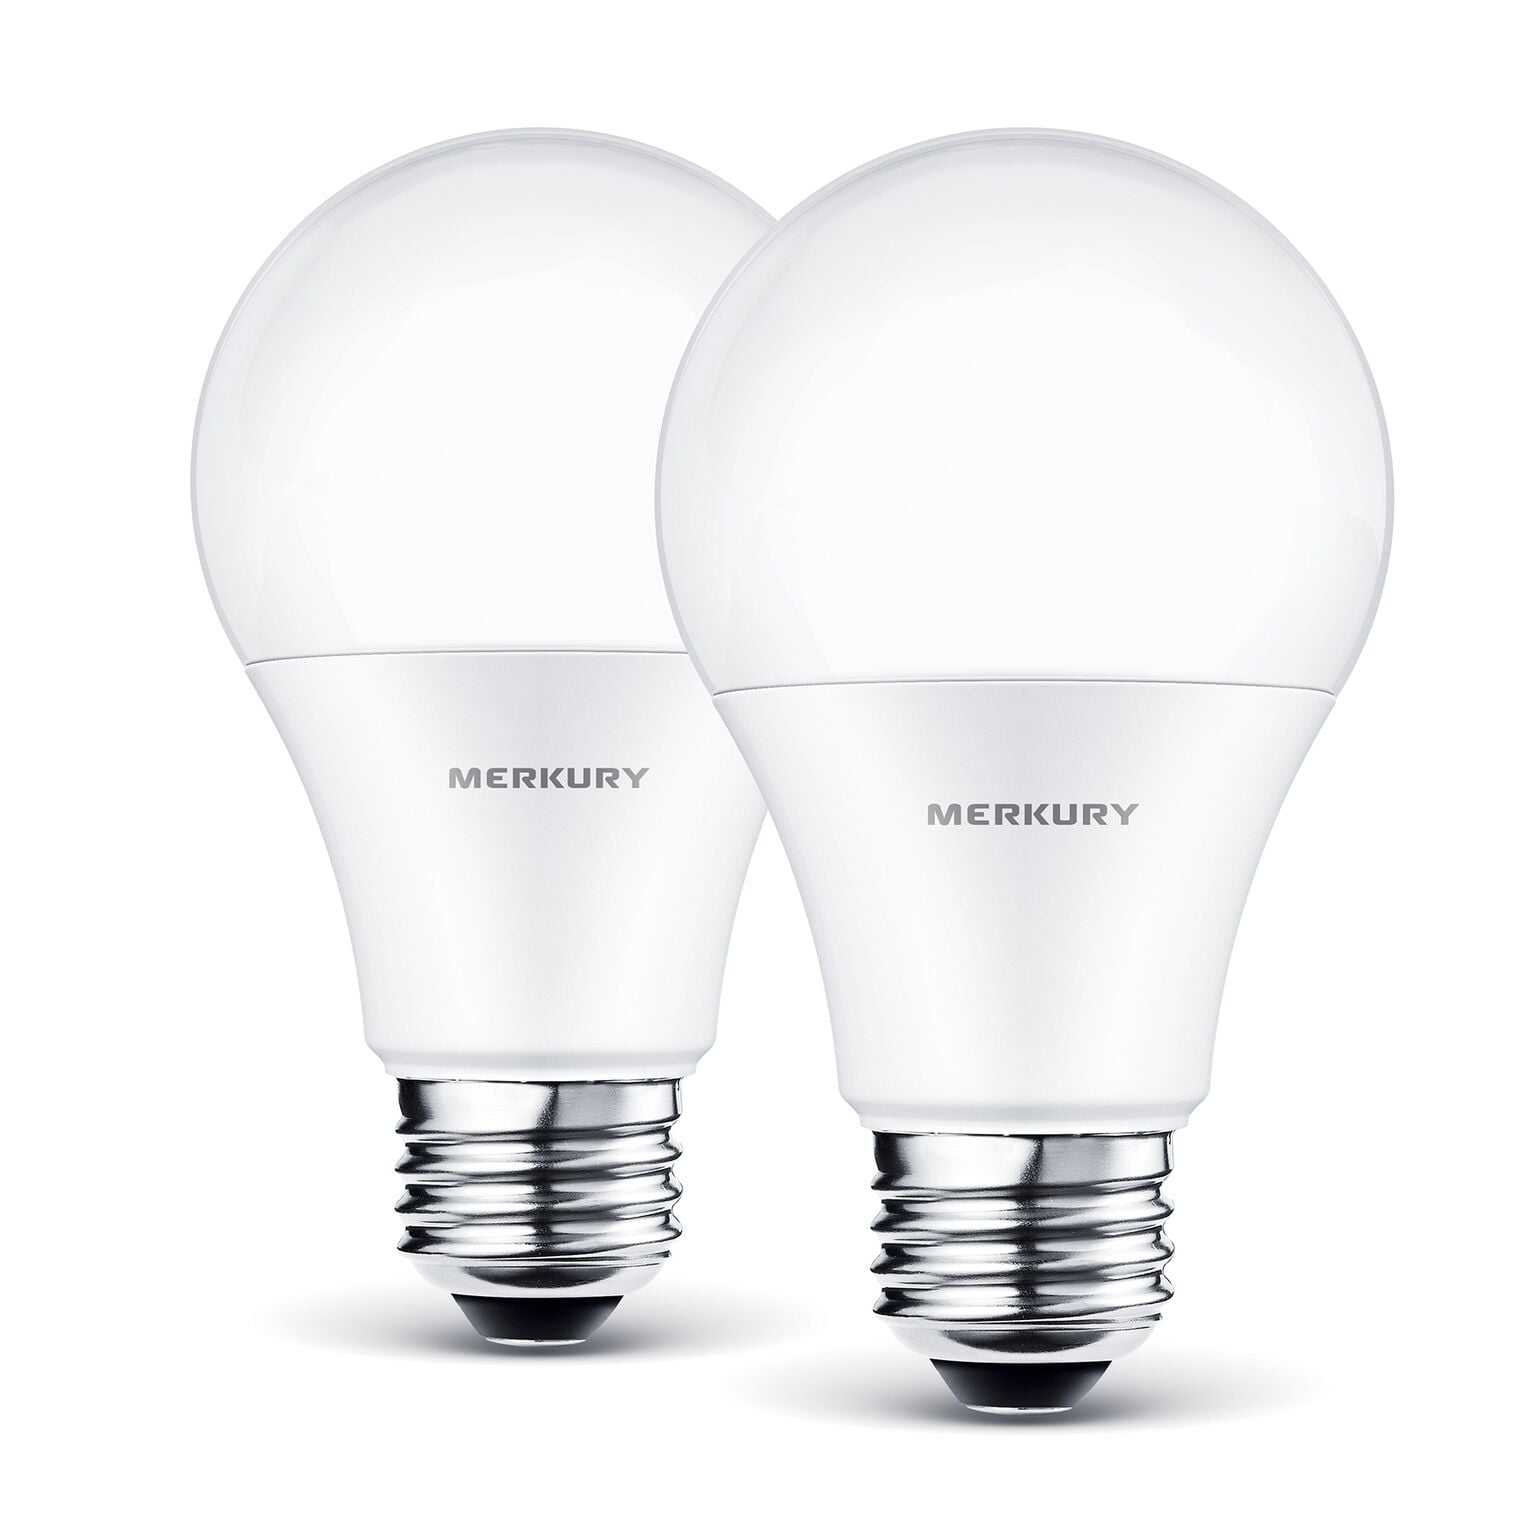 Merkury Innovations A19 Smart Light Bulb, 60W Dimmable White LED, 2